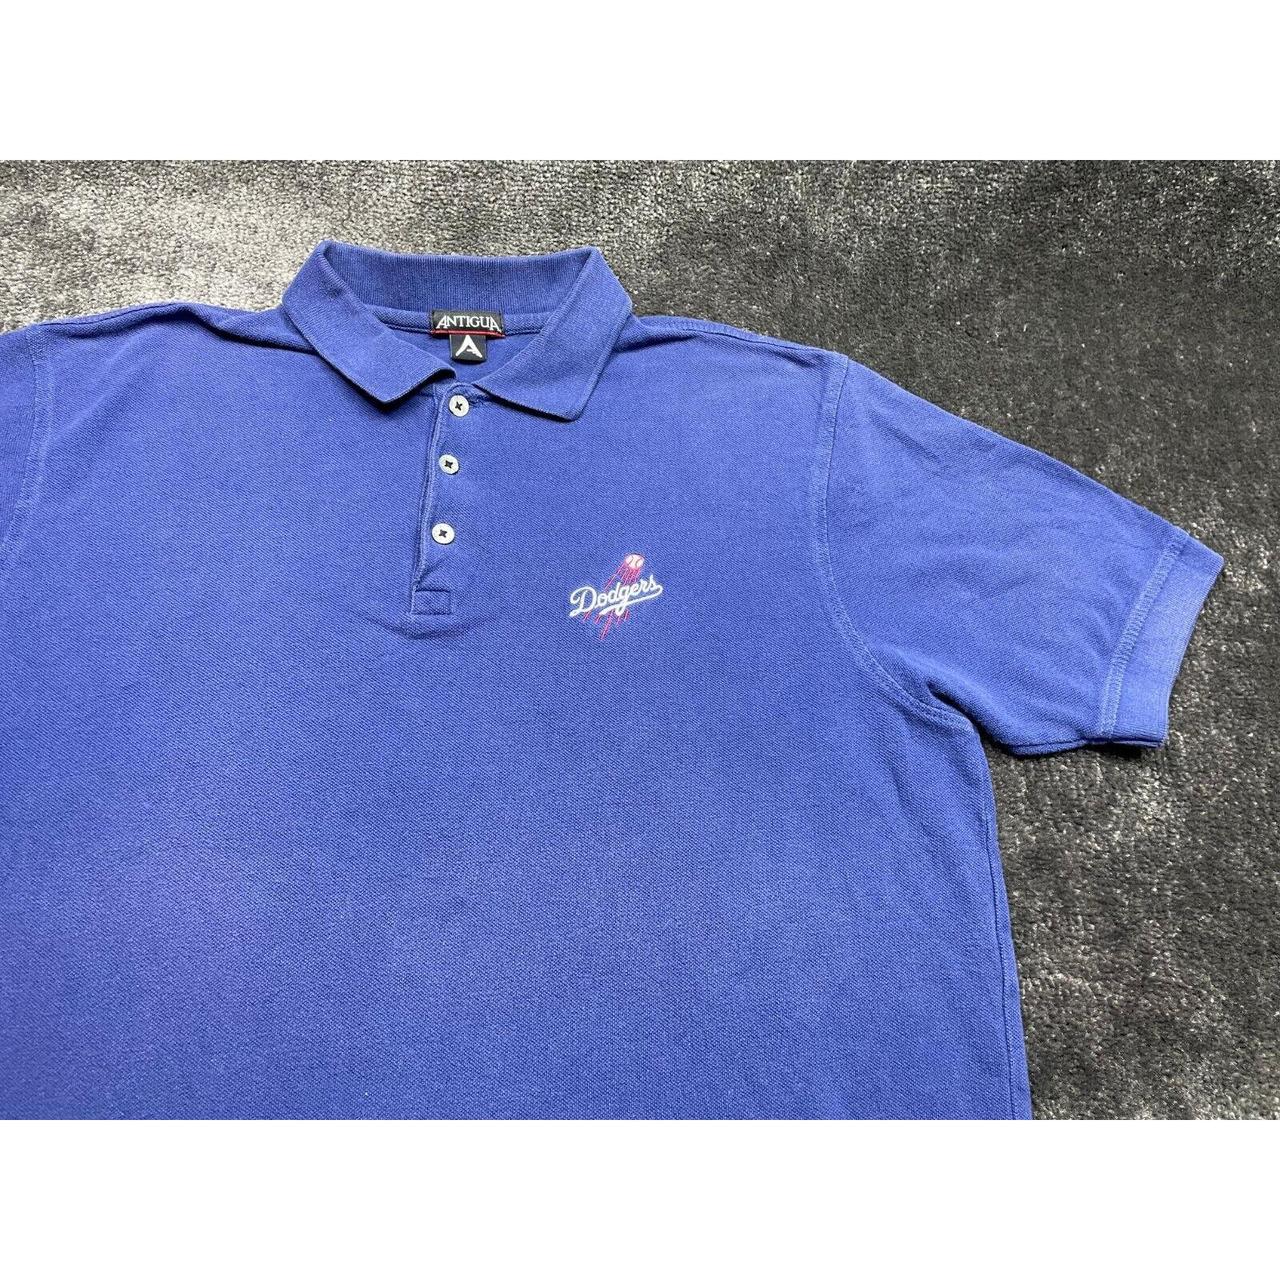 MLB Men's Polo Shirt - Blue - L